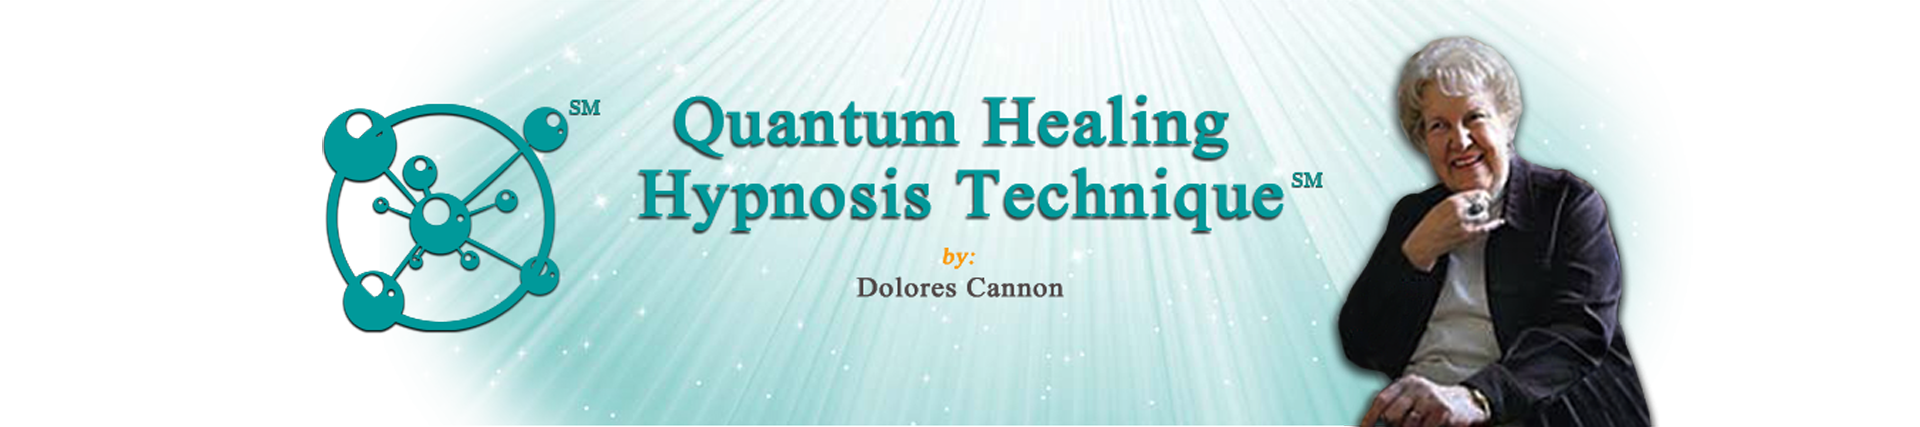 Quantum Healing Hypnosis Technique by Dolores Cannon